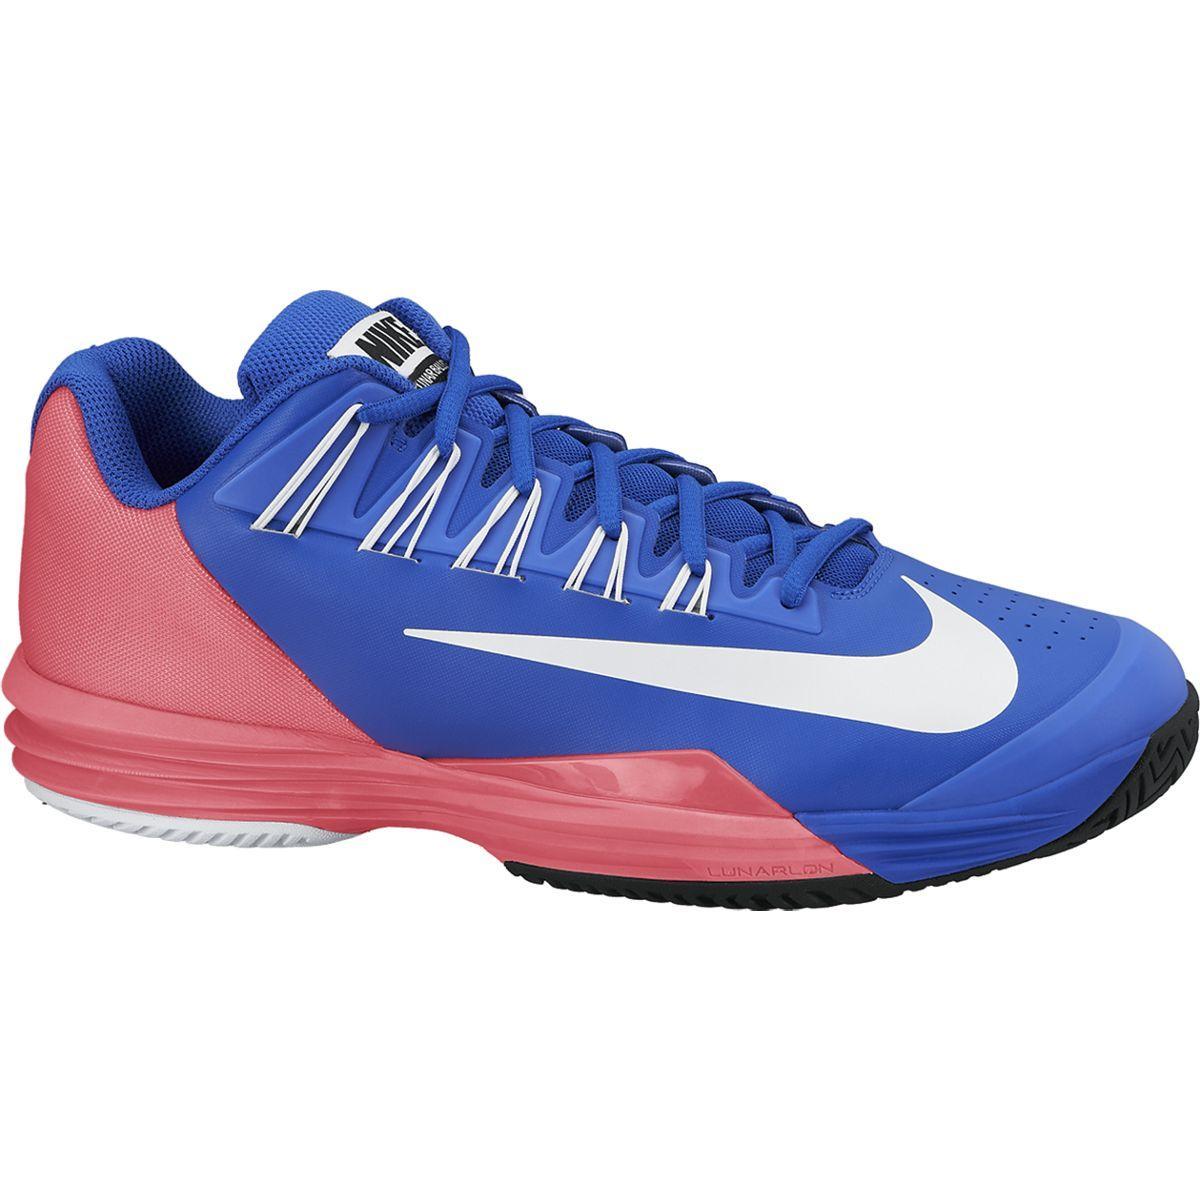 Mayo solitario blusa Nike Mens Lunar Ballistec Tennis Shoes - Blue/Pink - Tennisnuts.com